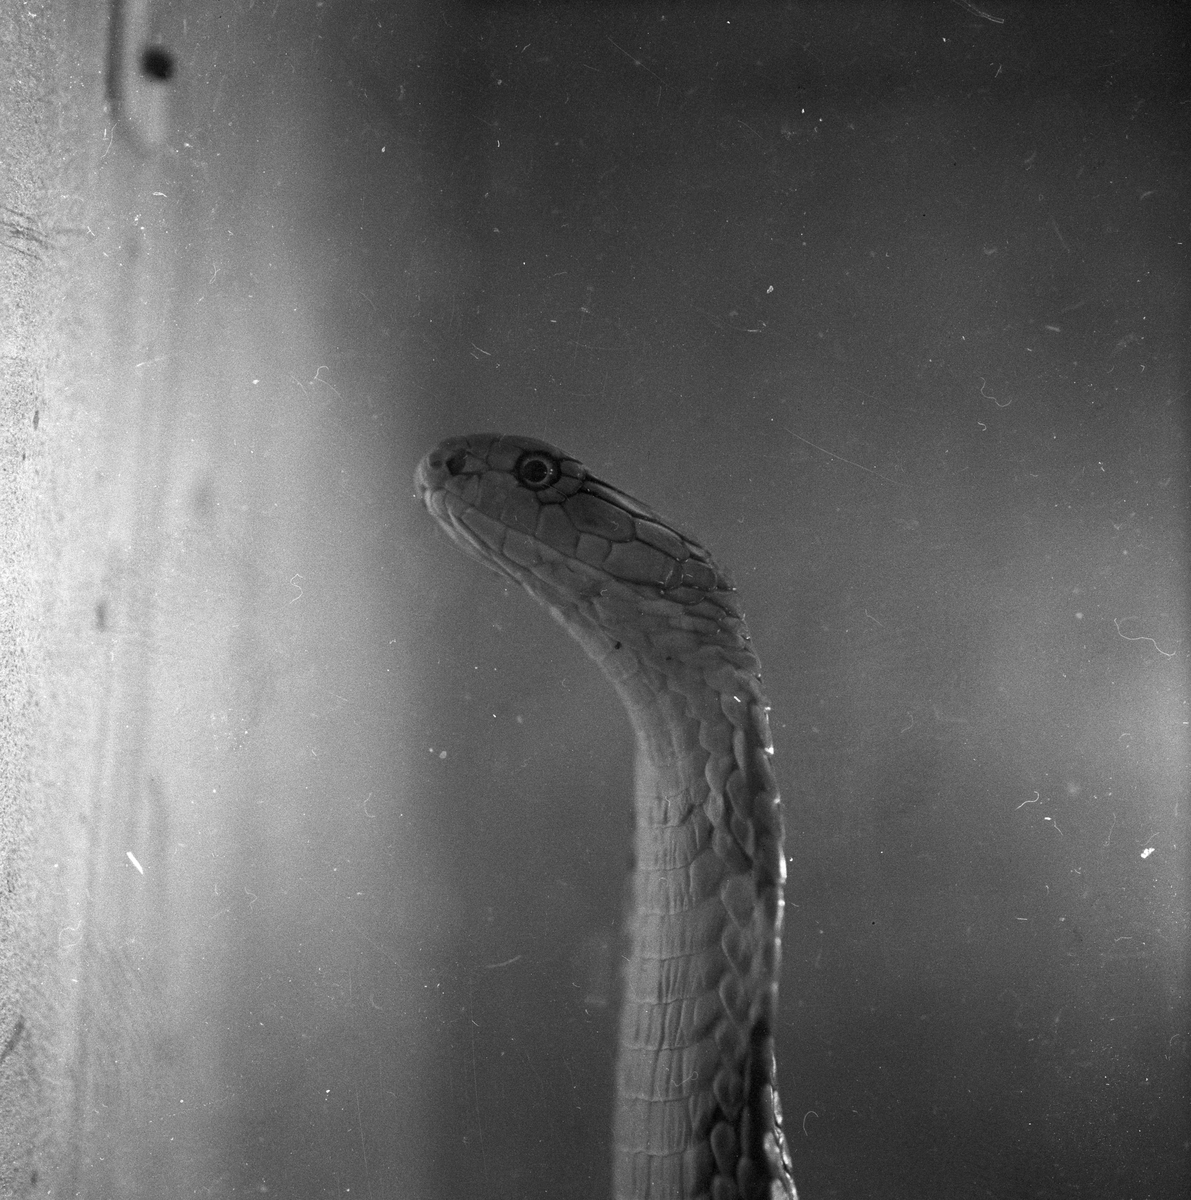 Kobraslange.
Fotografert 1956.